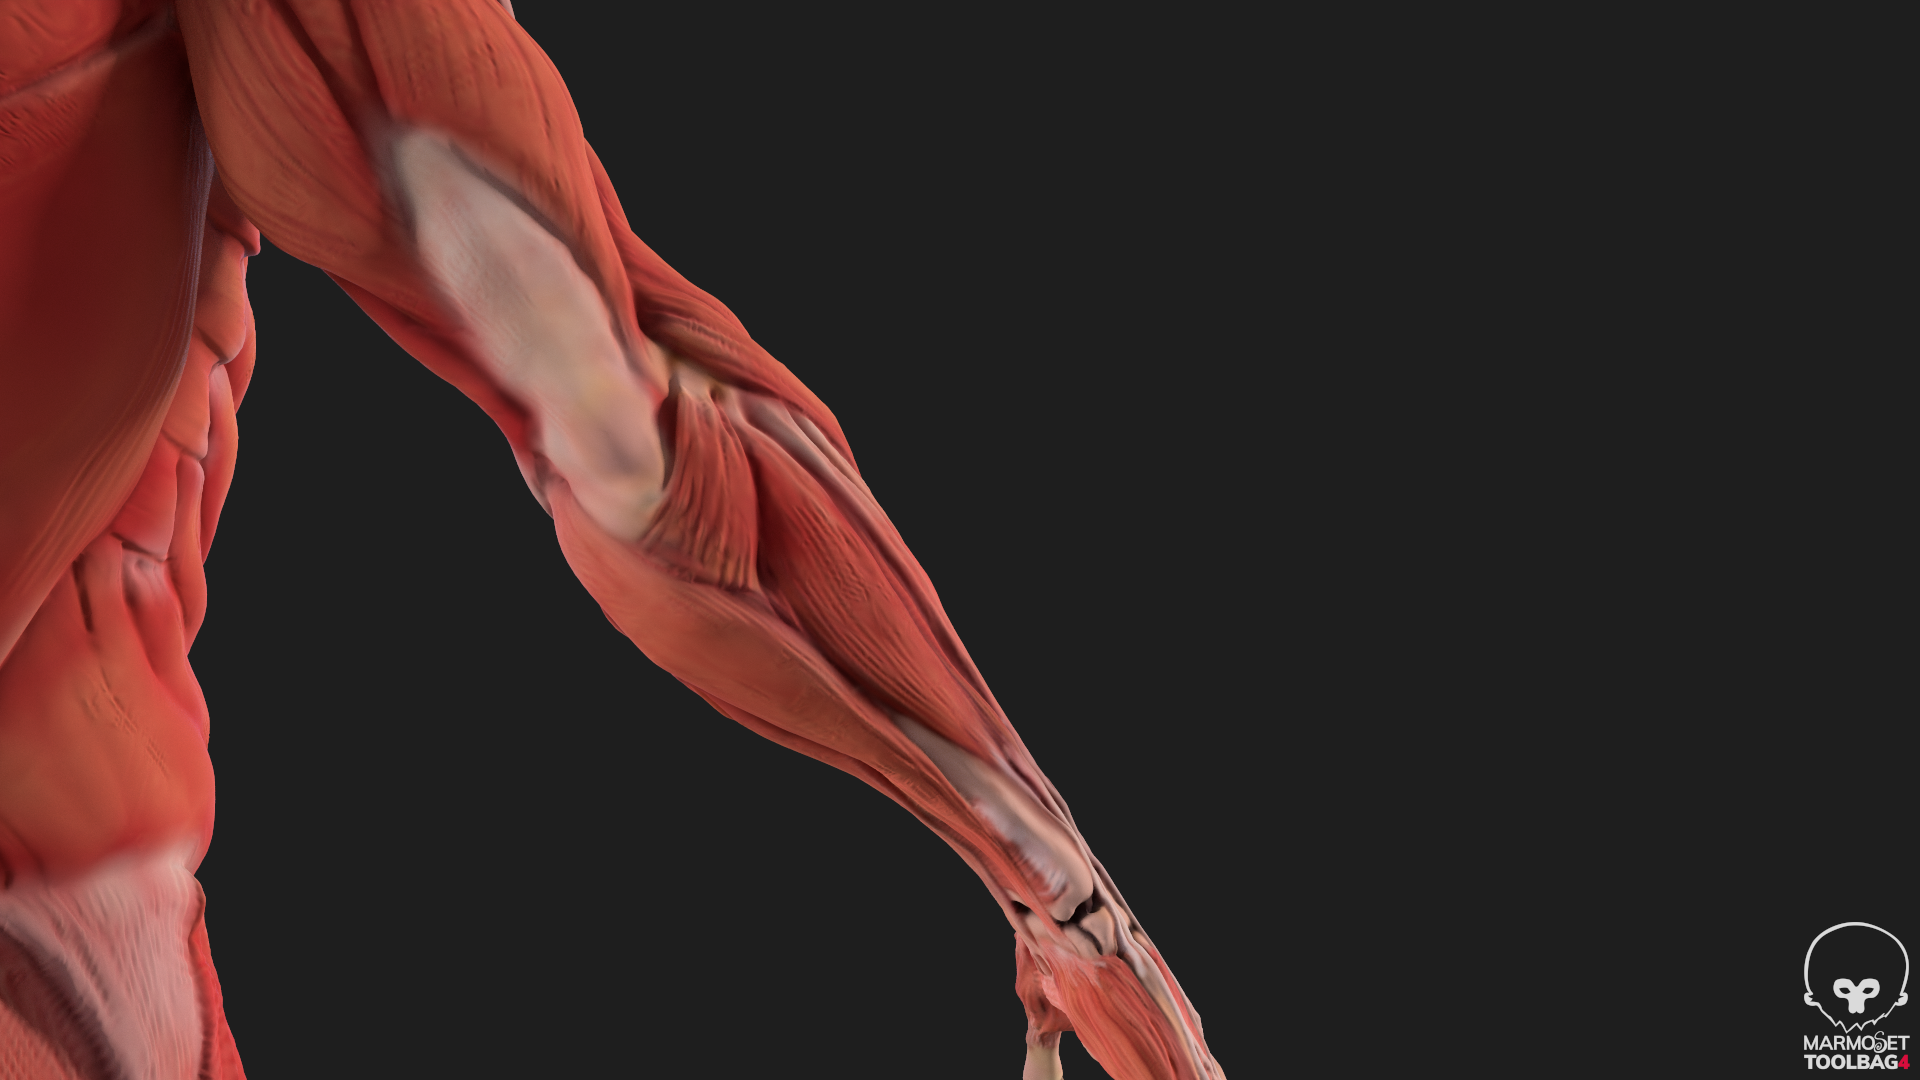 Human Anatomy Kit complete body Muscular System & Skeleton by ahmadali55